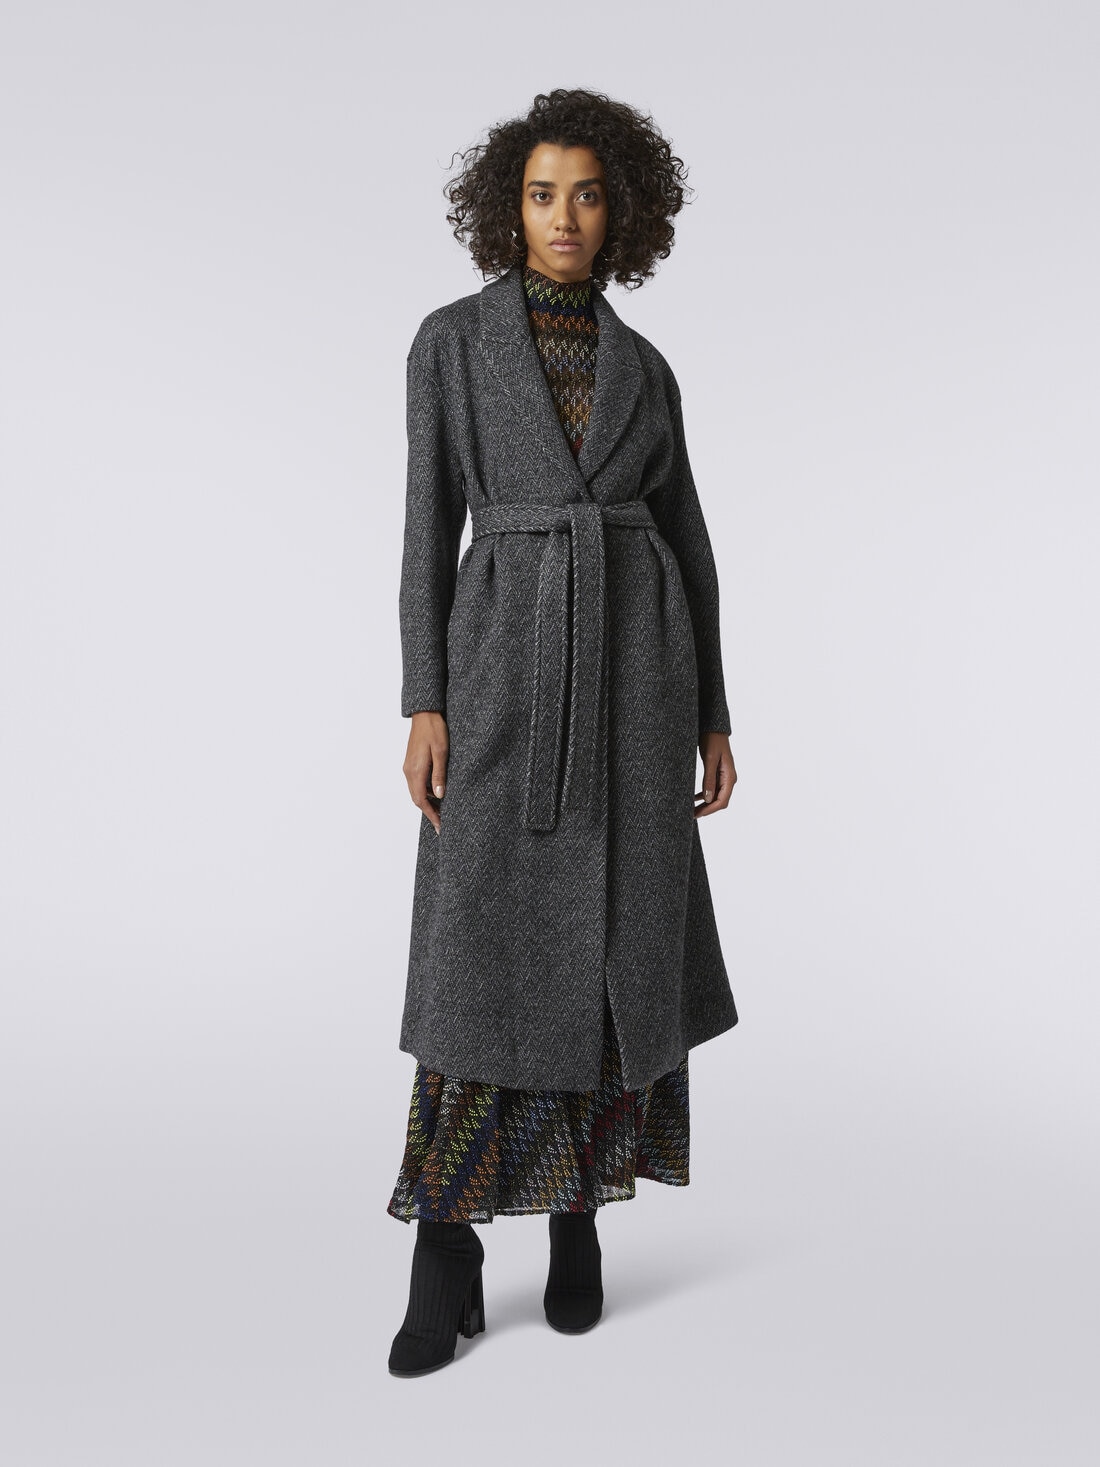 Wool coat with herringbone pattern, Black    - DC23WC00BT003OS91HG - 1